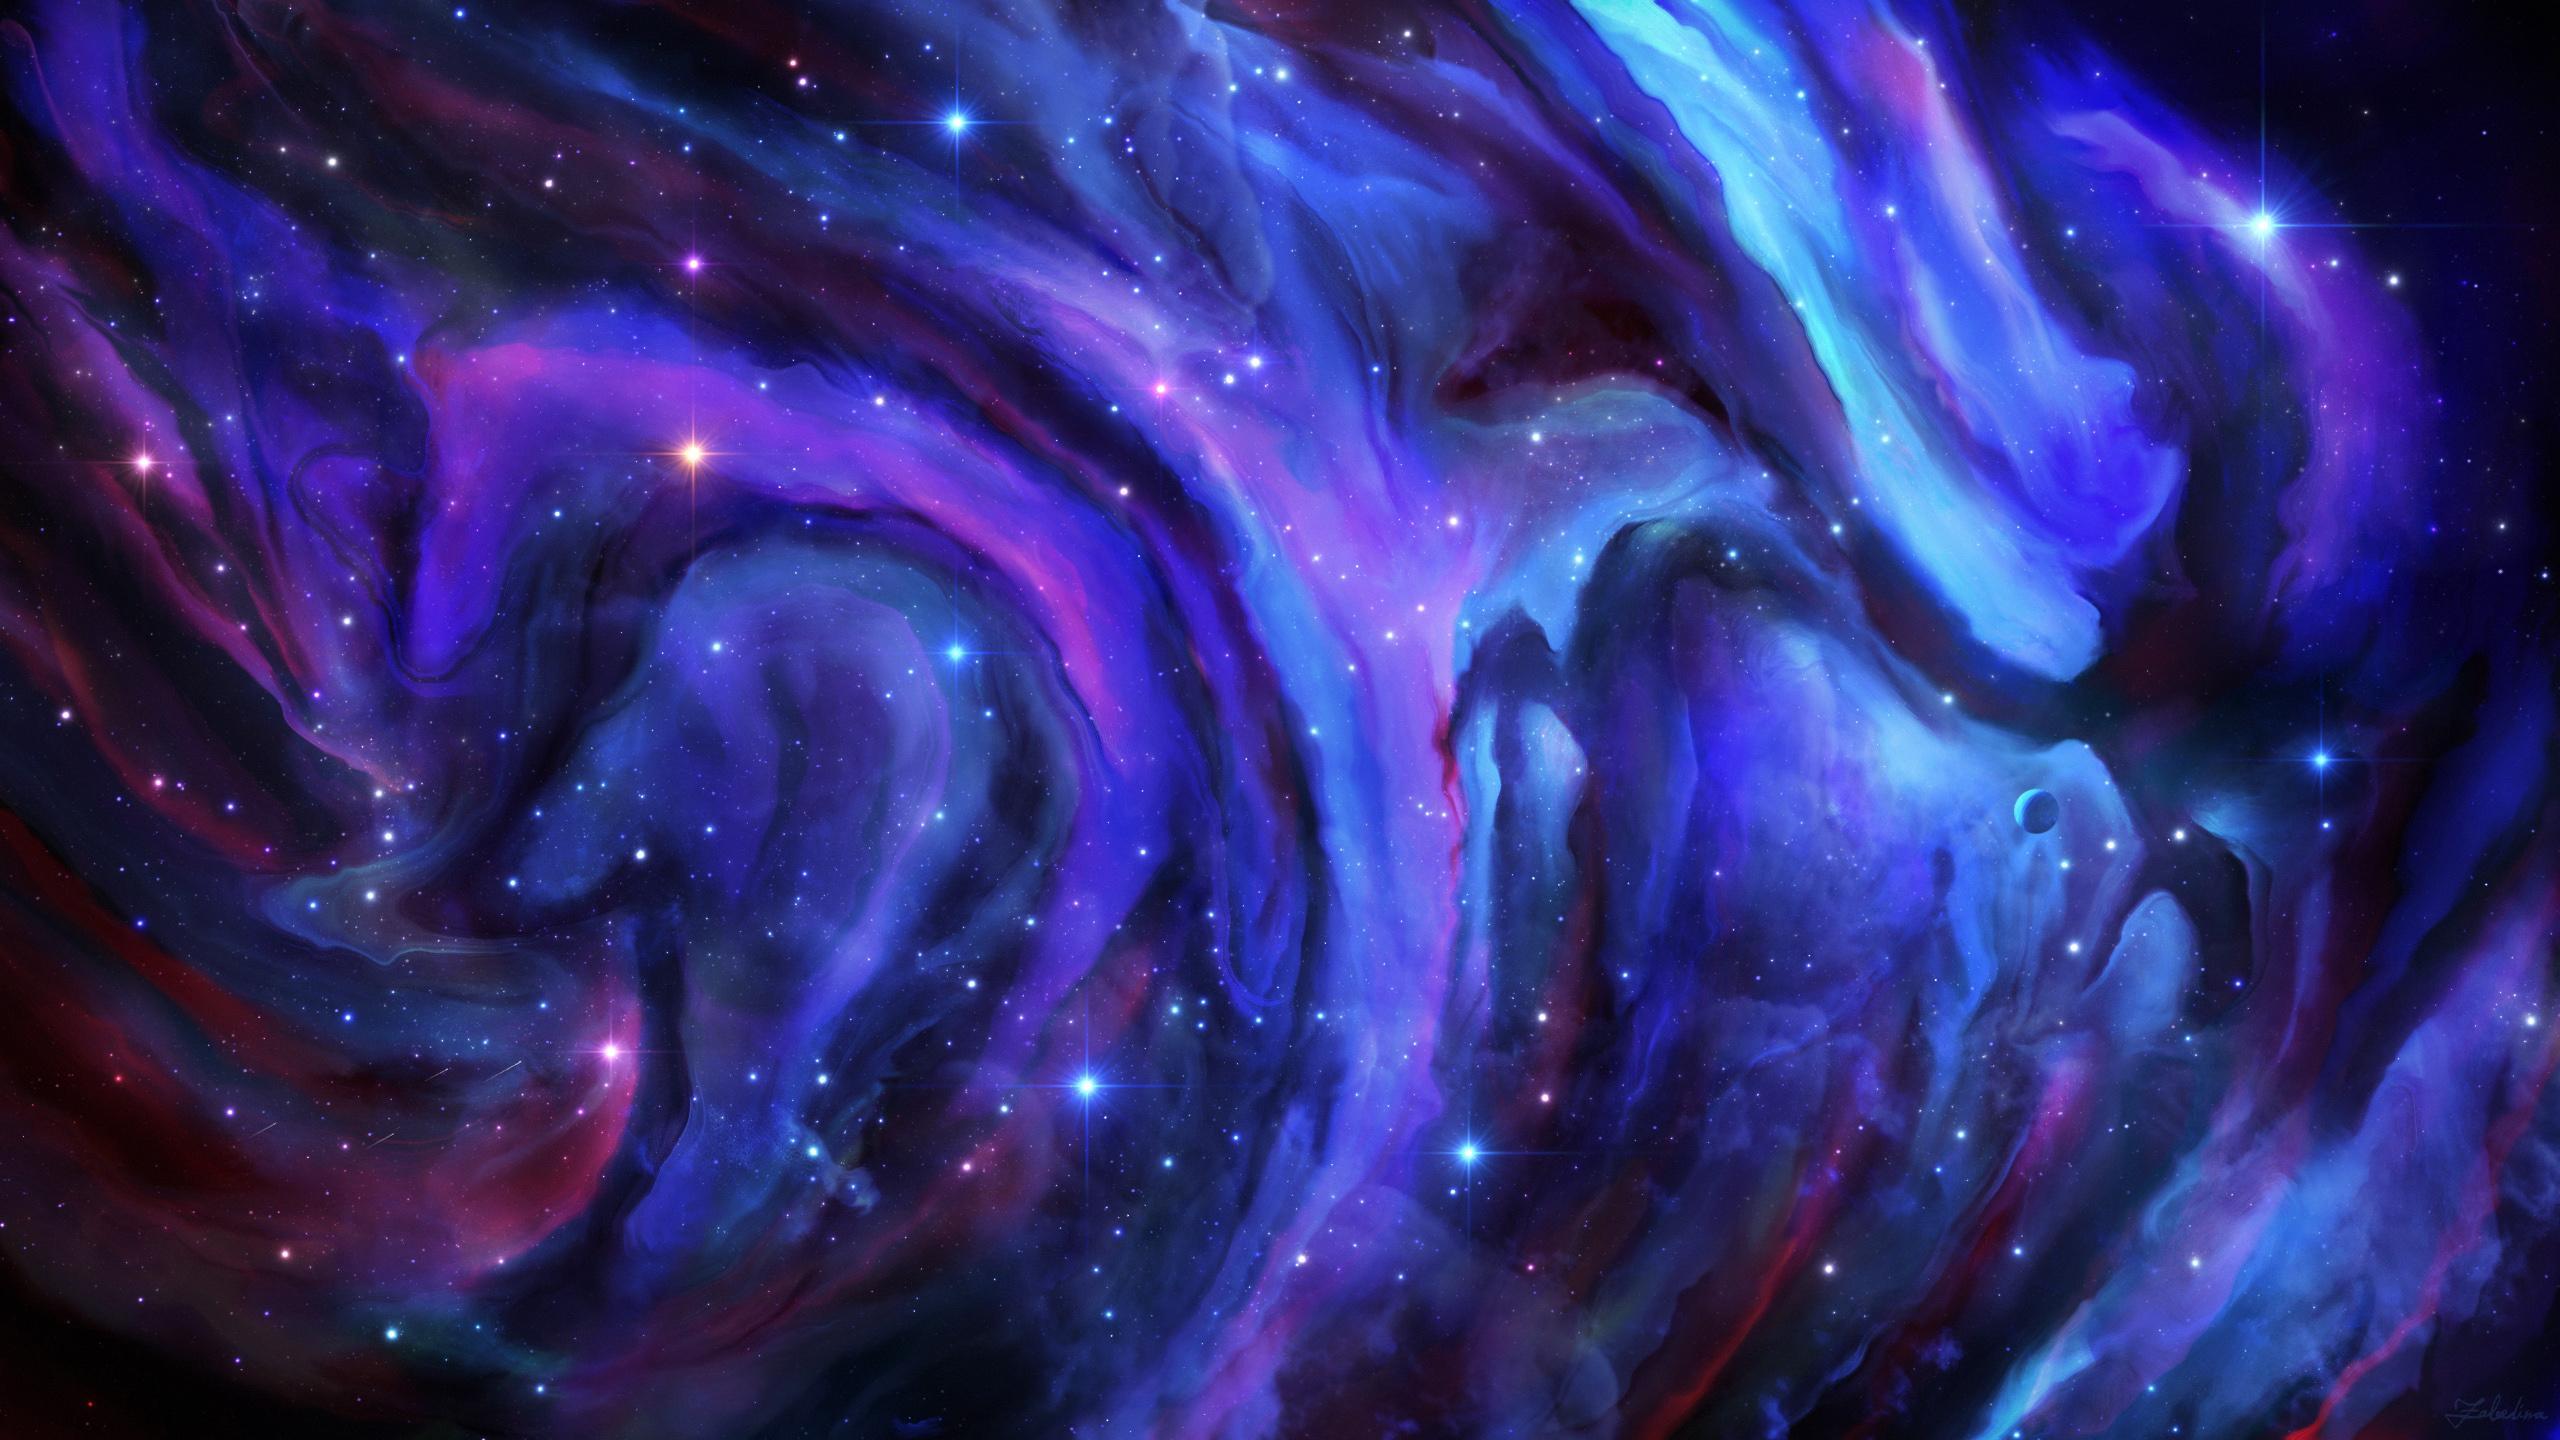 Nebula Indigo Wallpaper, HD Space 4K Wallpaper, Image, Photo